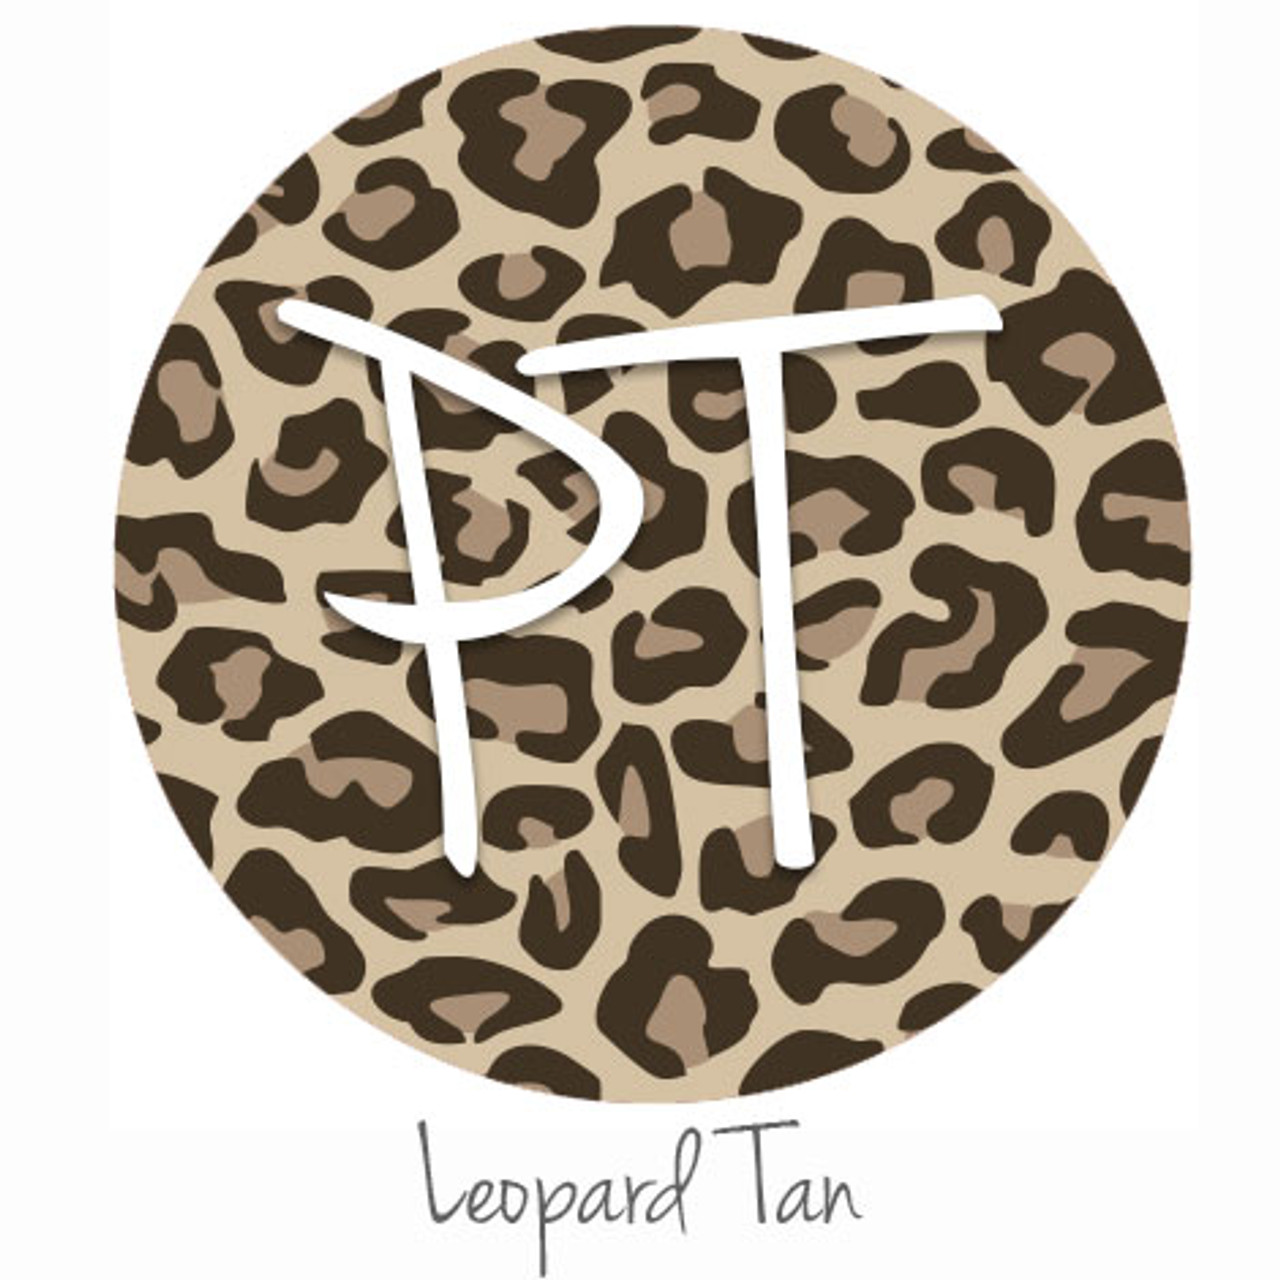 Pink Leopard print craft patterned vinyl sheet, heat transfer/HTV or A